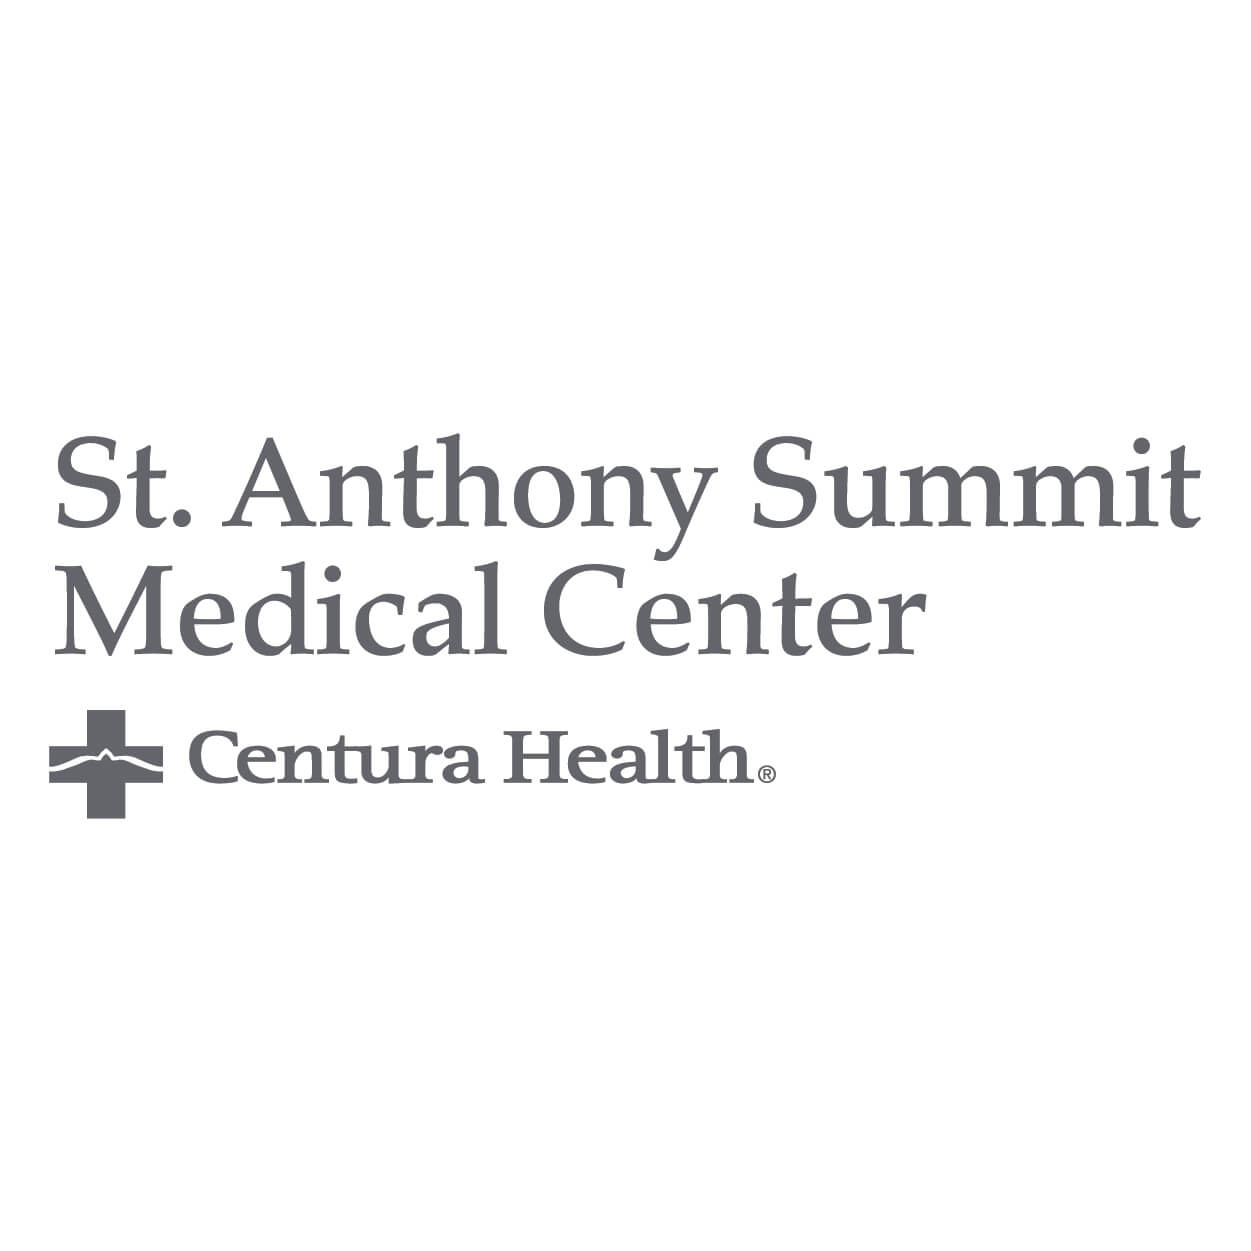 St. Anthony Summit Medical Center - Centura Health